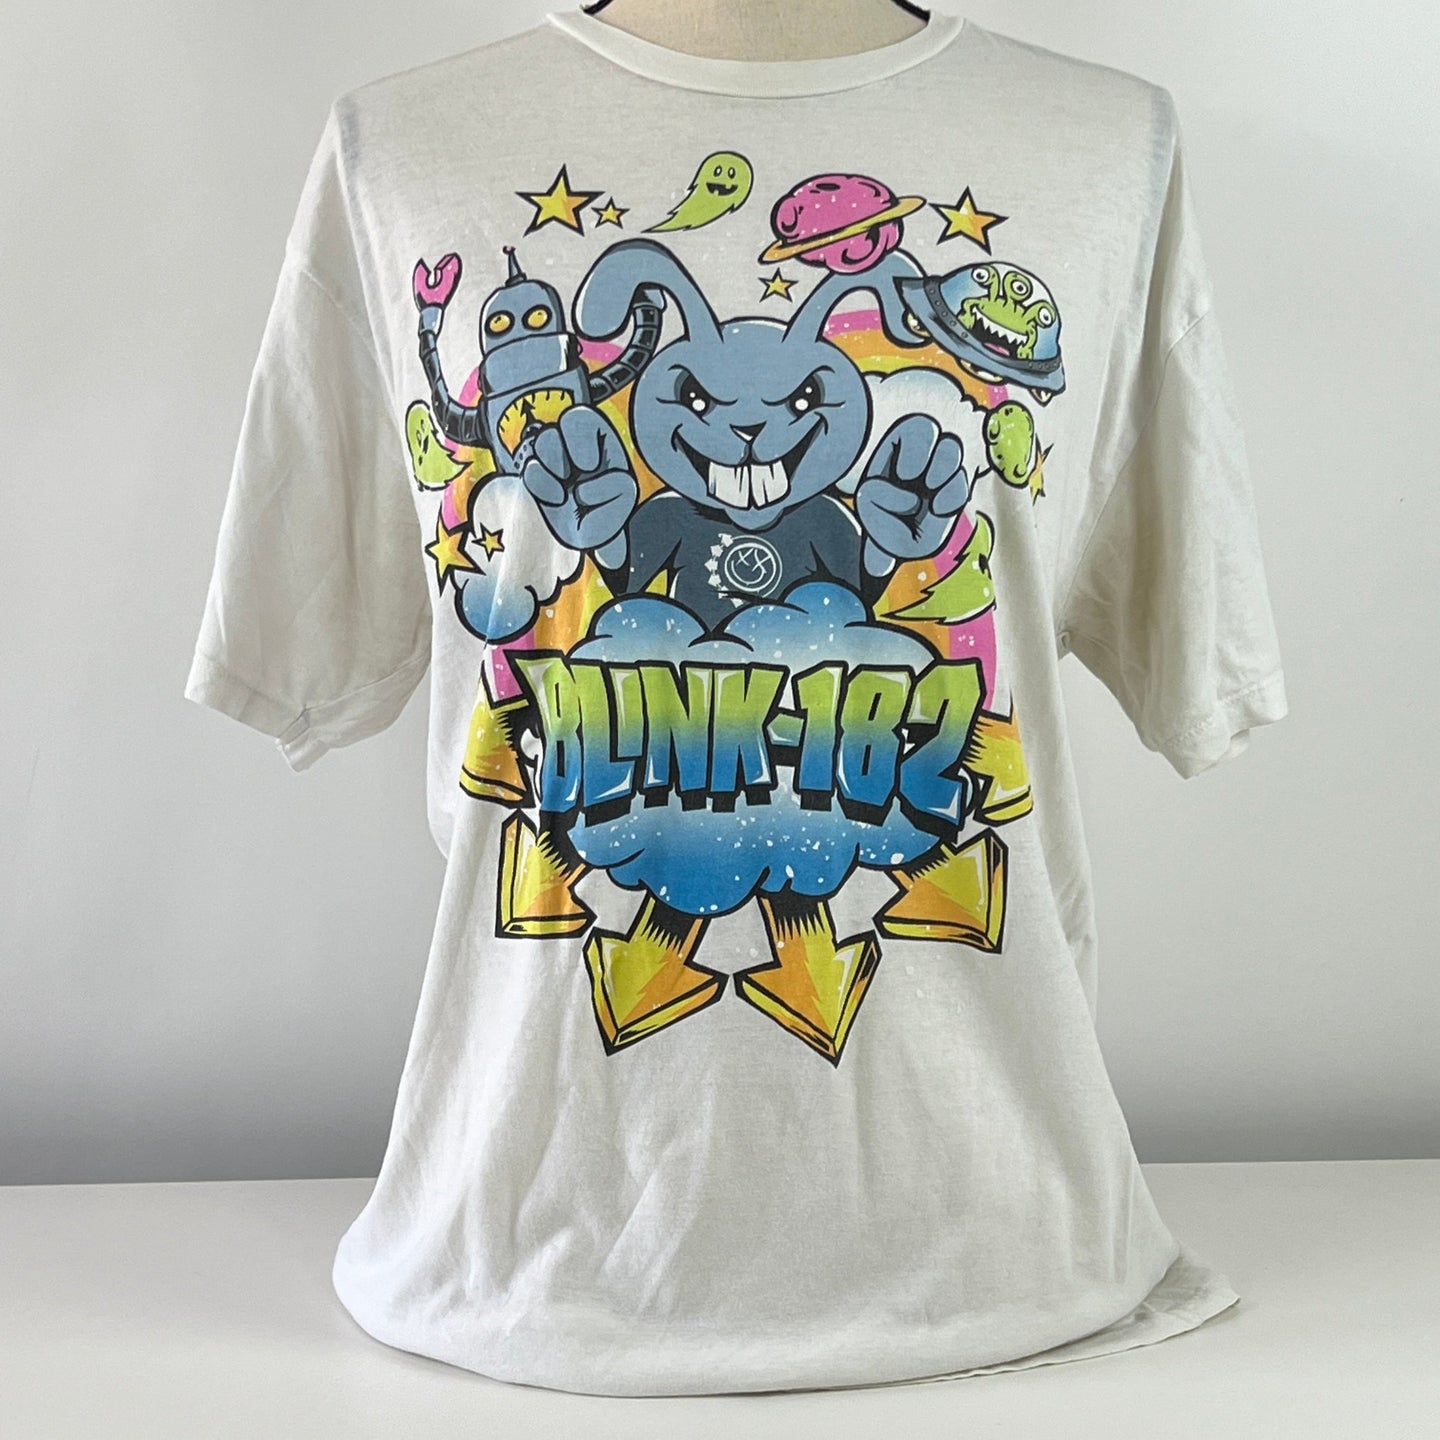 Vintage Blink 182 Band Tee Shirt Size XL